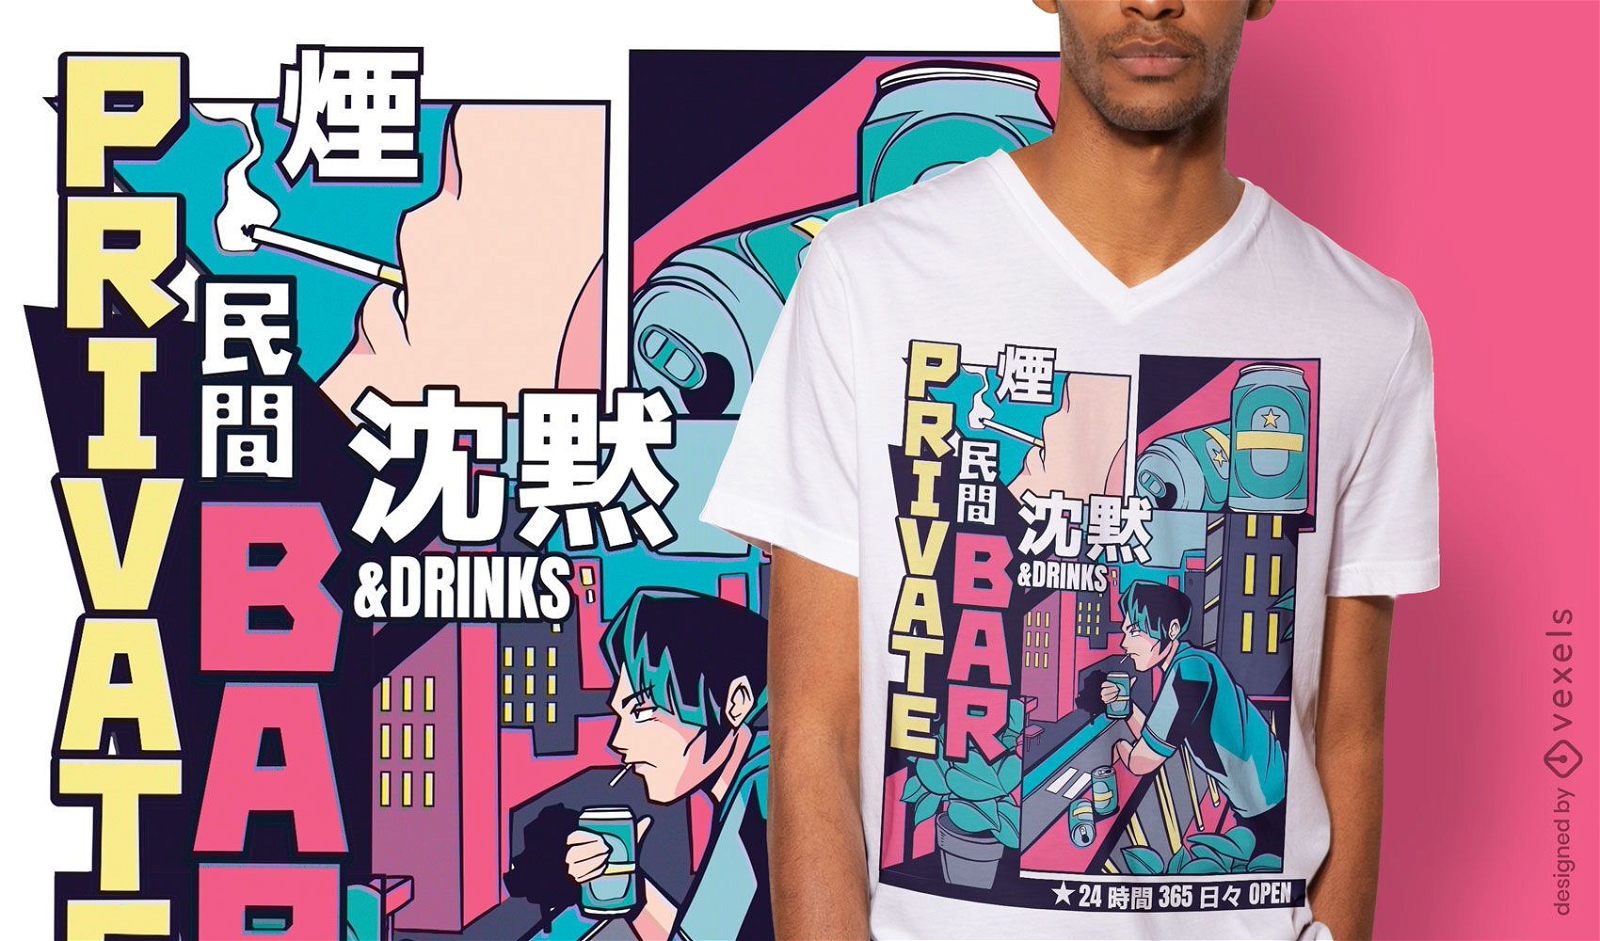 Anime bar vaporwave t-shirt design